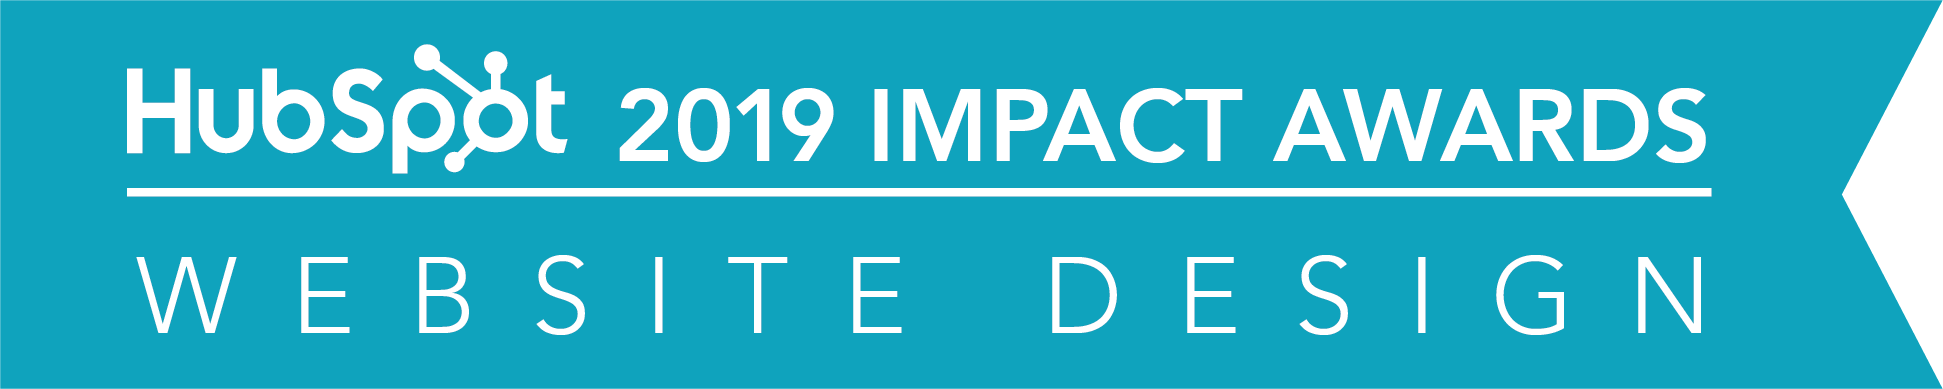 Hubspot_ImpactAwards_2019_WebsiteDesign-02 (1)